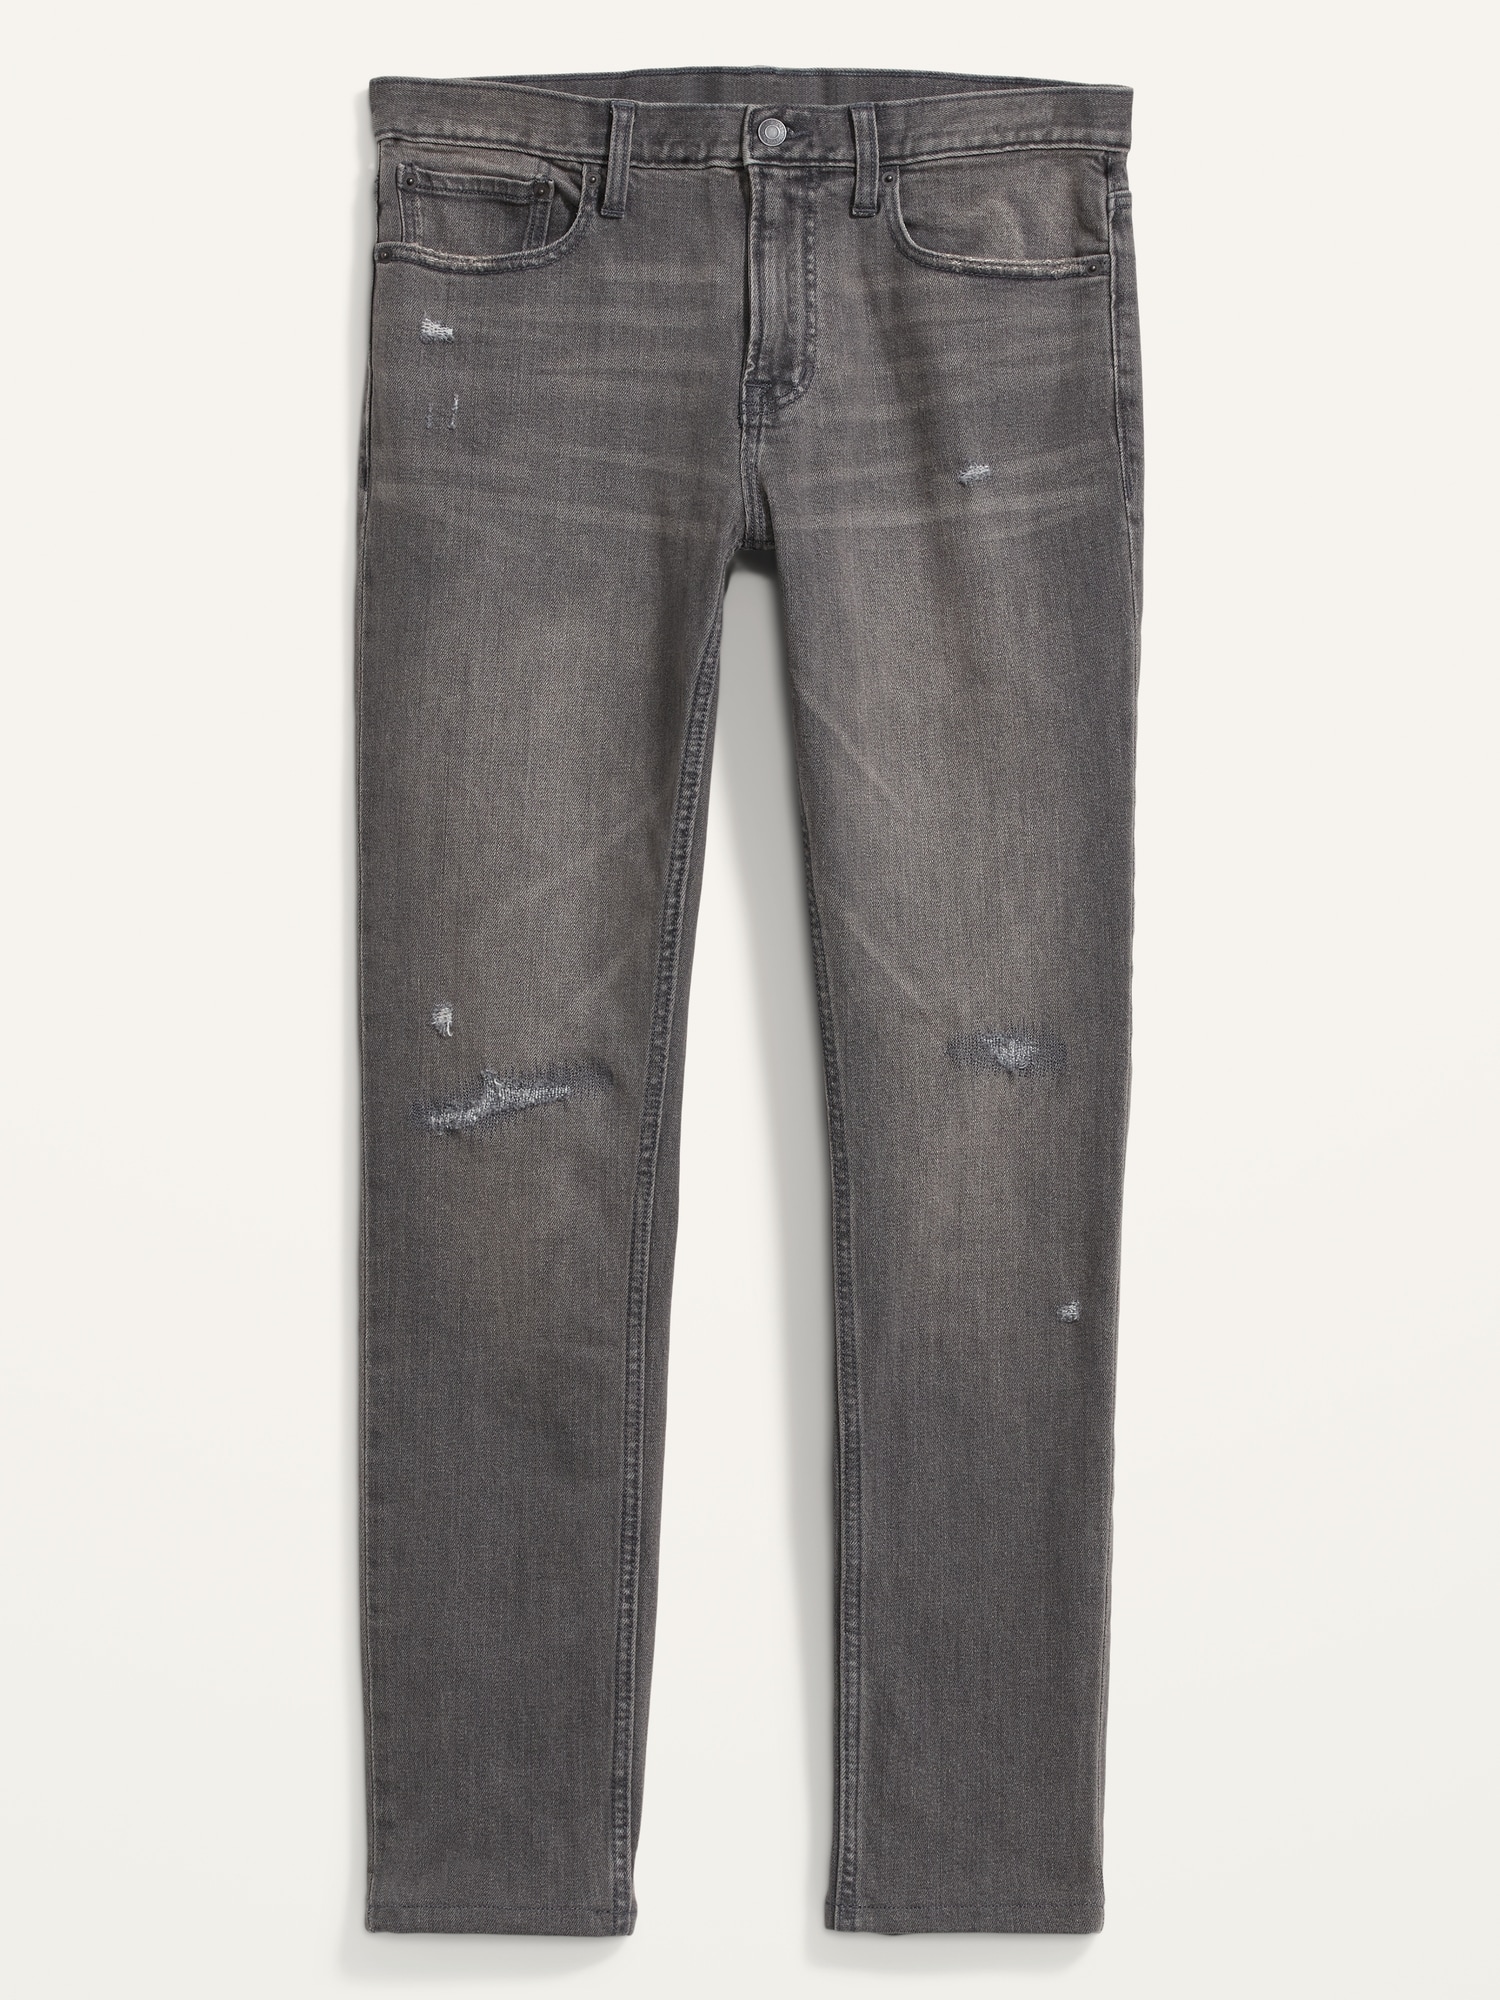 Slim Built-In Flex Ripped Gray Jeans for Men | Old Navy